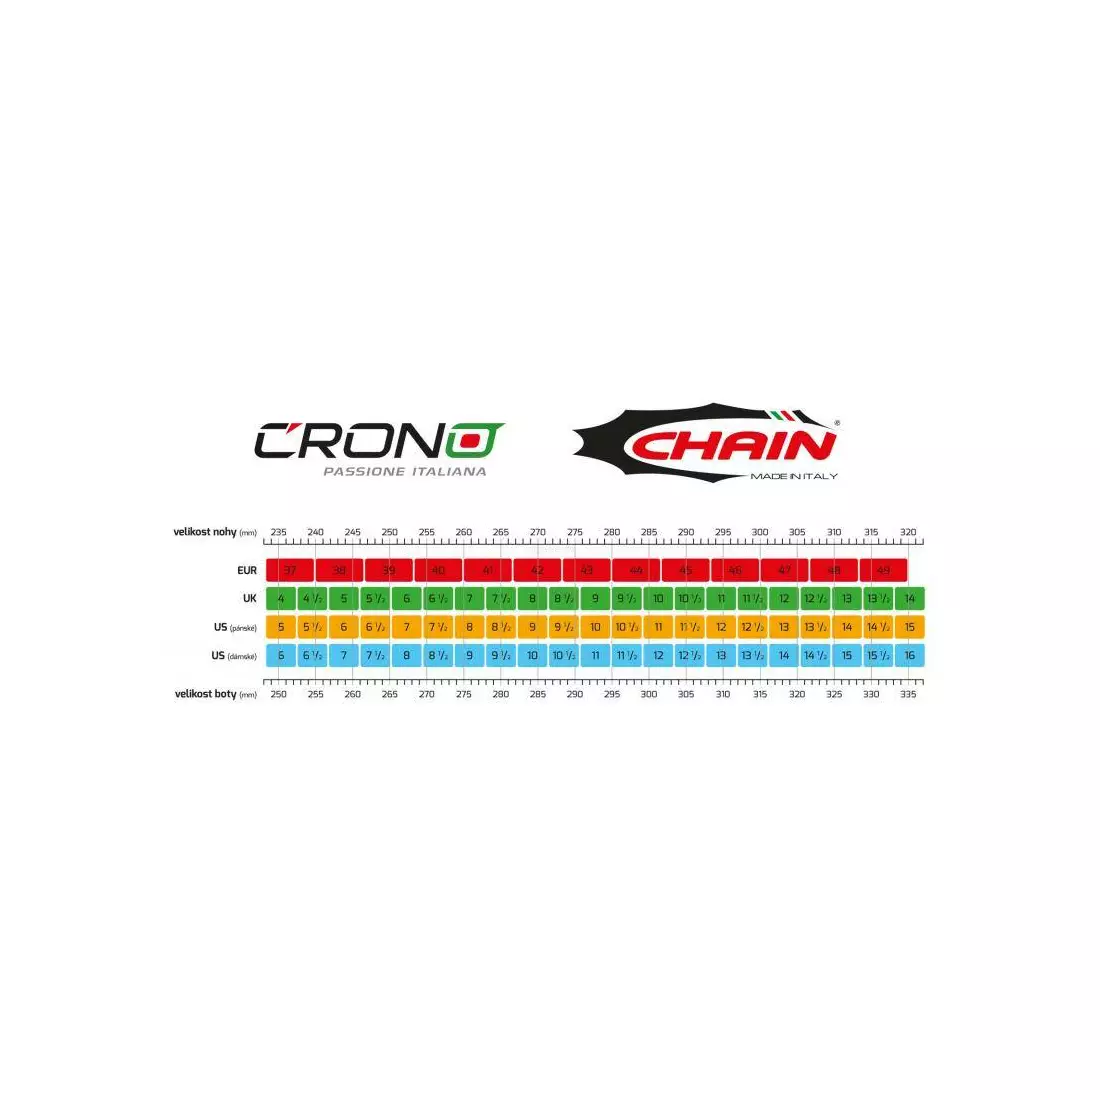 CRONO CT-1-20 Triatlonové cyklistické boty MTB, kompozitové, černé